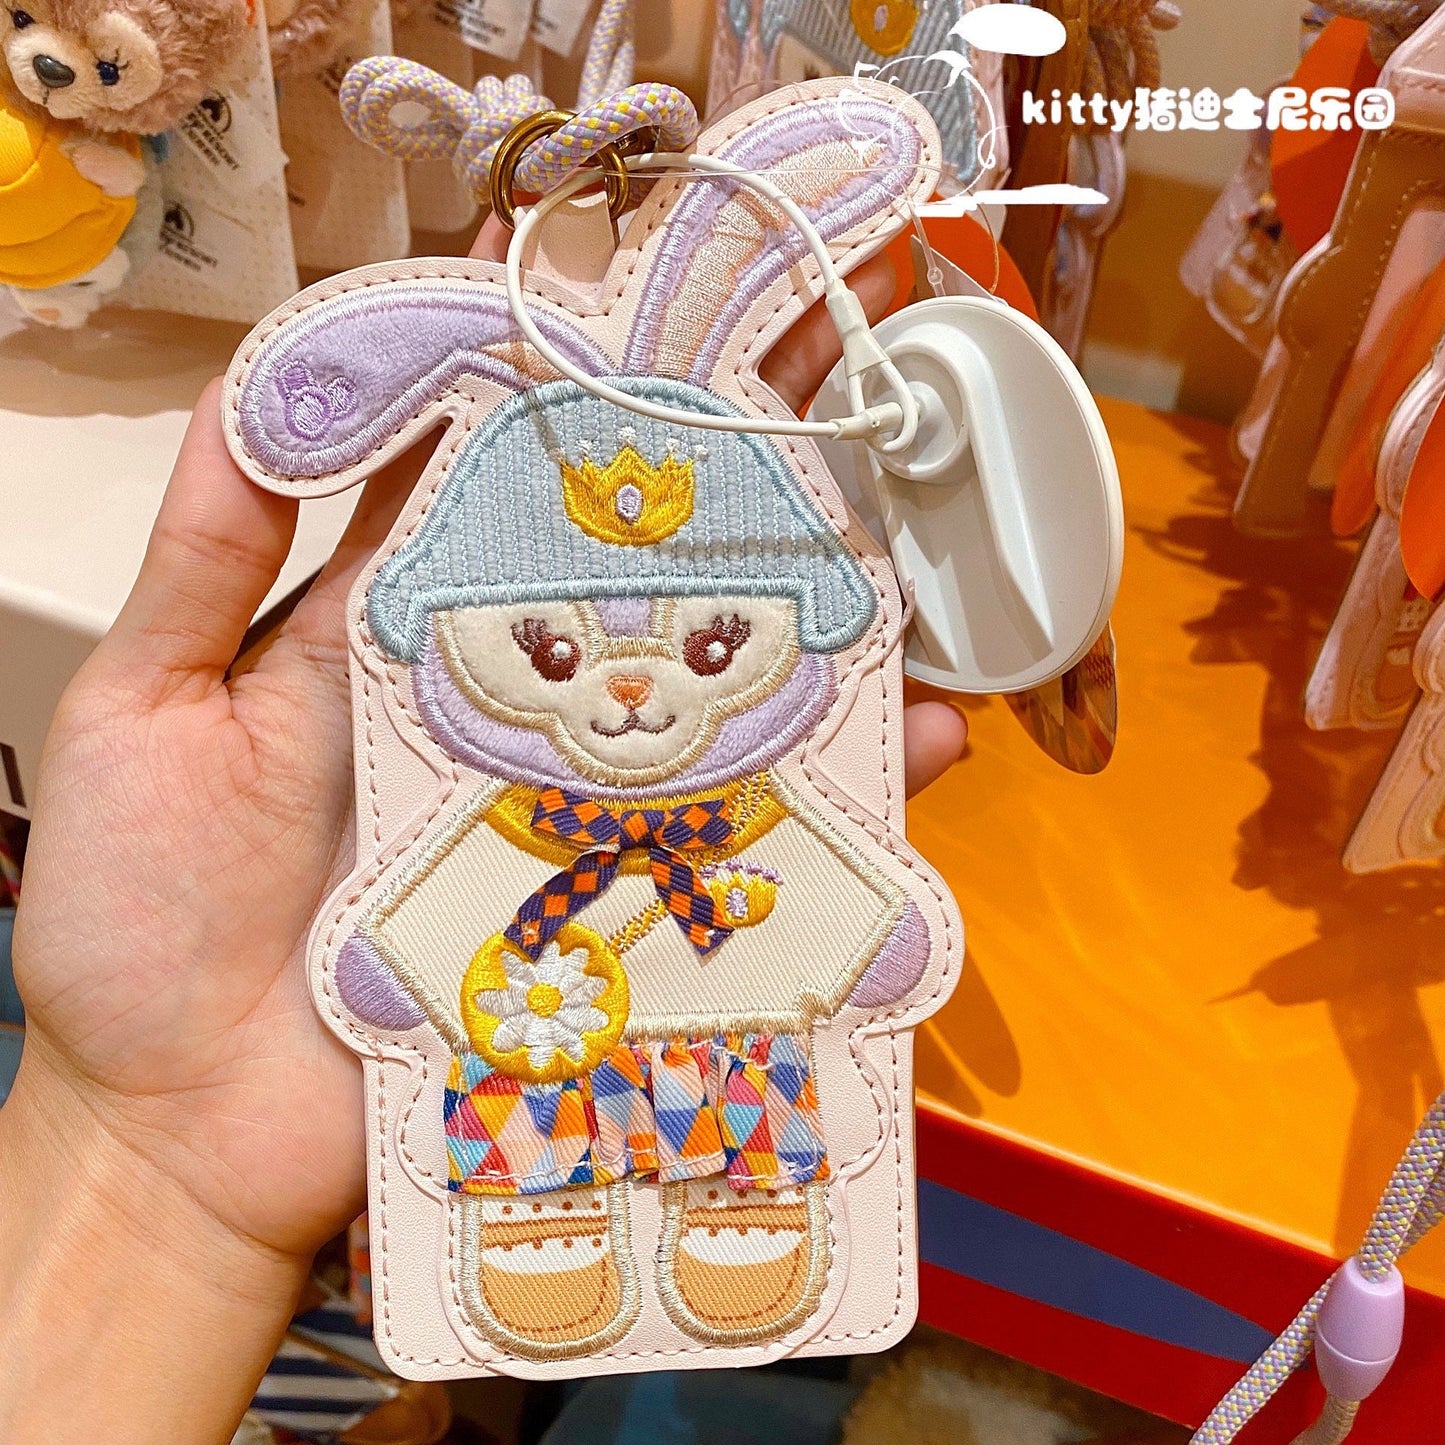 Shanghai Disneyland 「Duffy and friends」StellaLou Autumn Garden party / Craft Time card holder